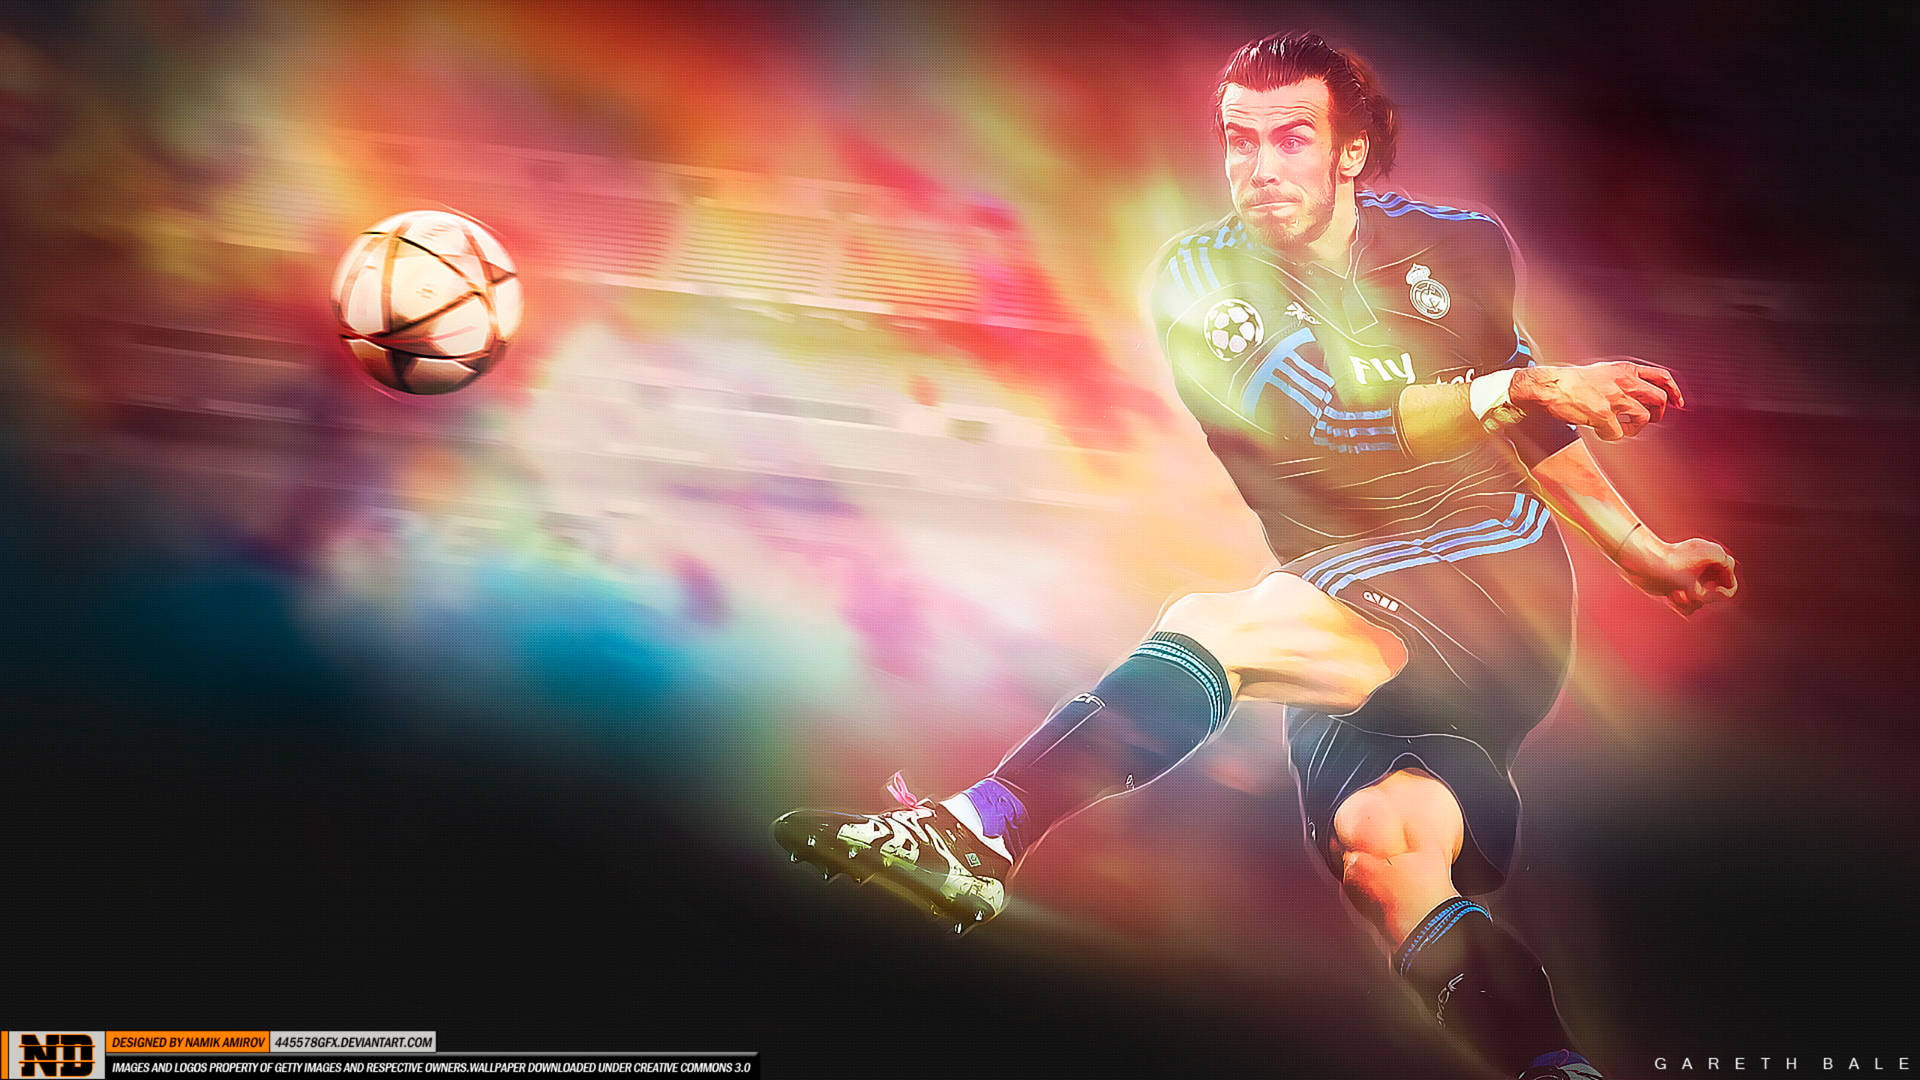 Gareth Bale In Multicolored Aesthetic